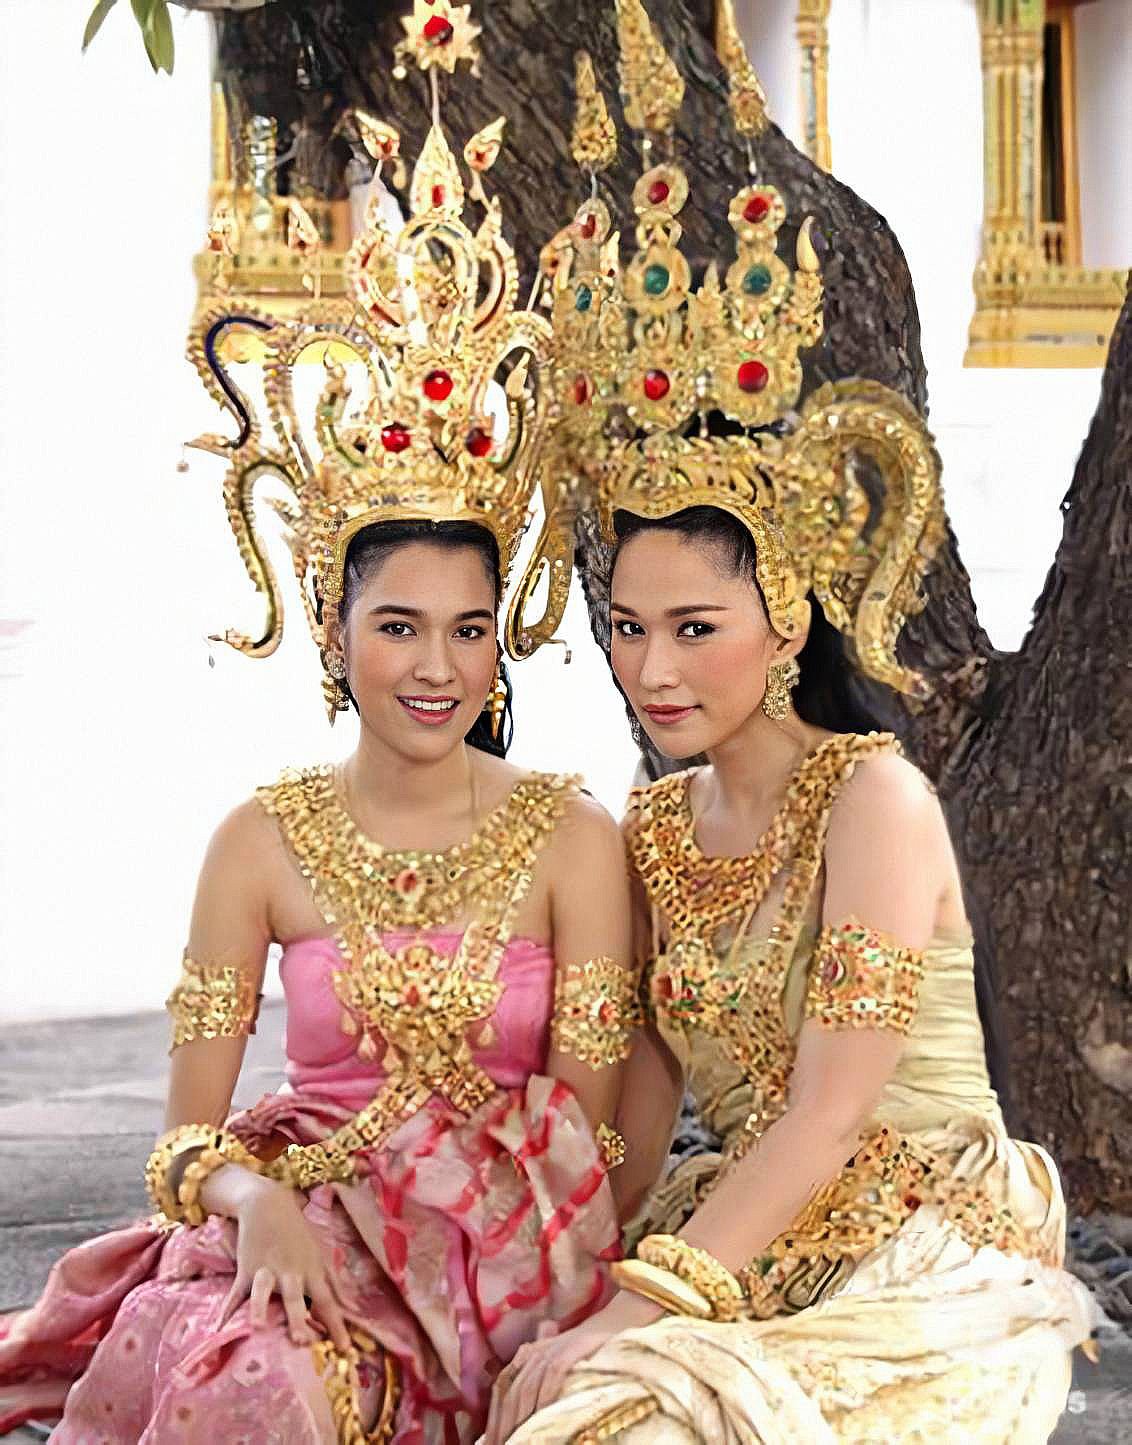 Тайцы одежда. Тайланд нац. Одежда. Тайский национальный костюм. Национальная одежда Таиланда. Костюм тайцев.